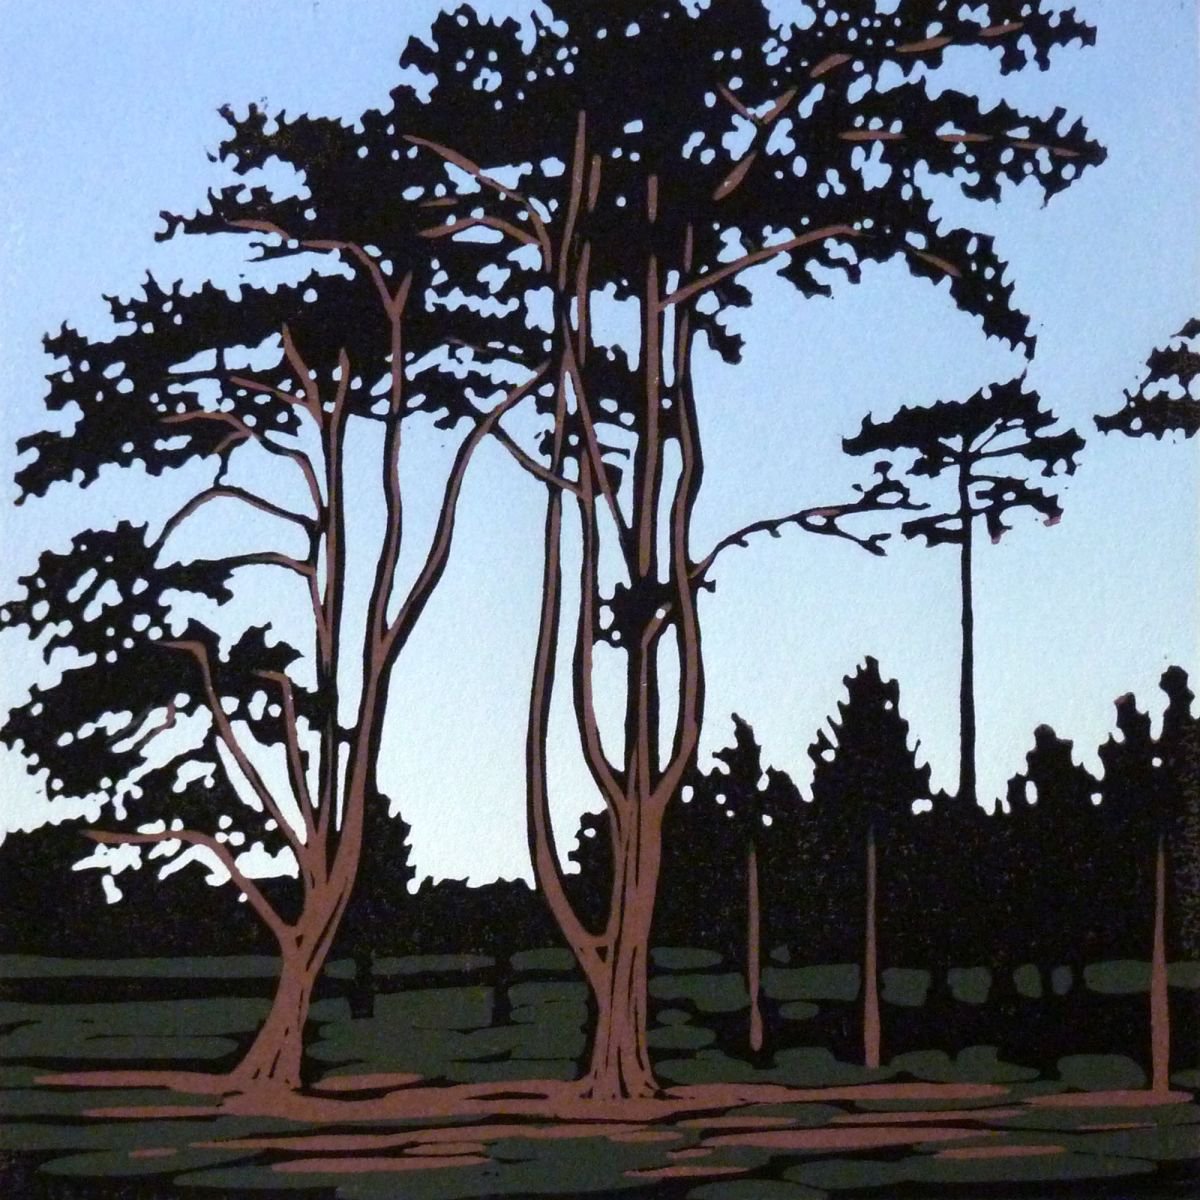 Waddesdon Trees #2 by Alexandra Buckle